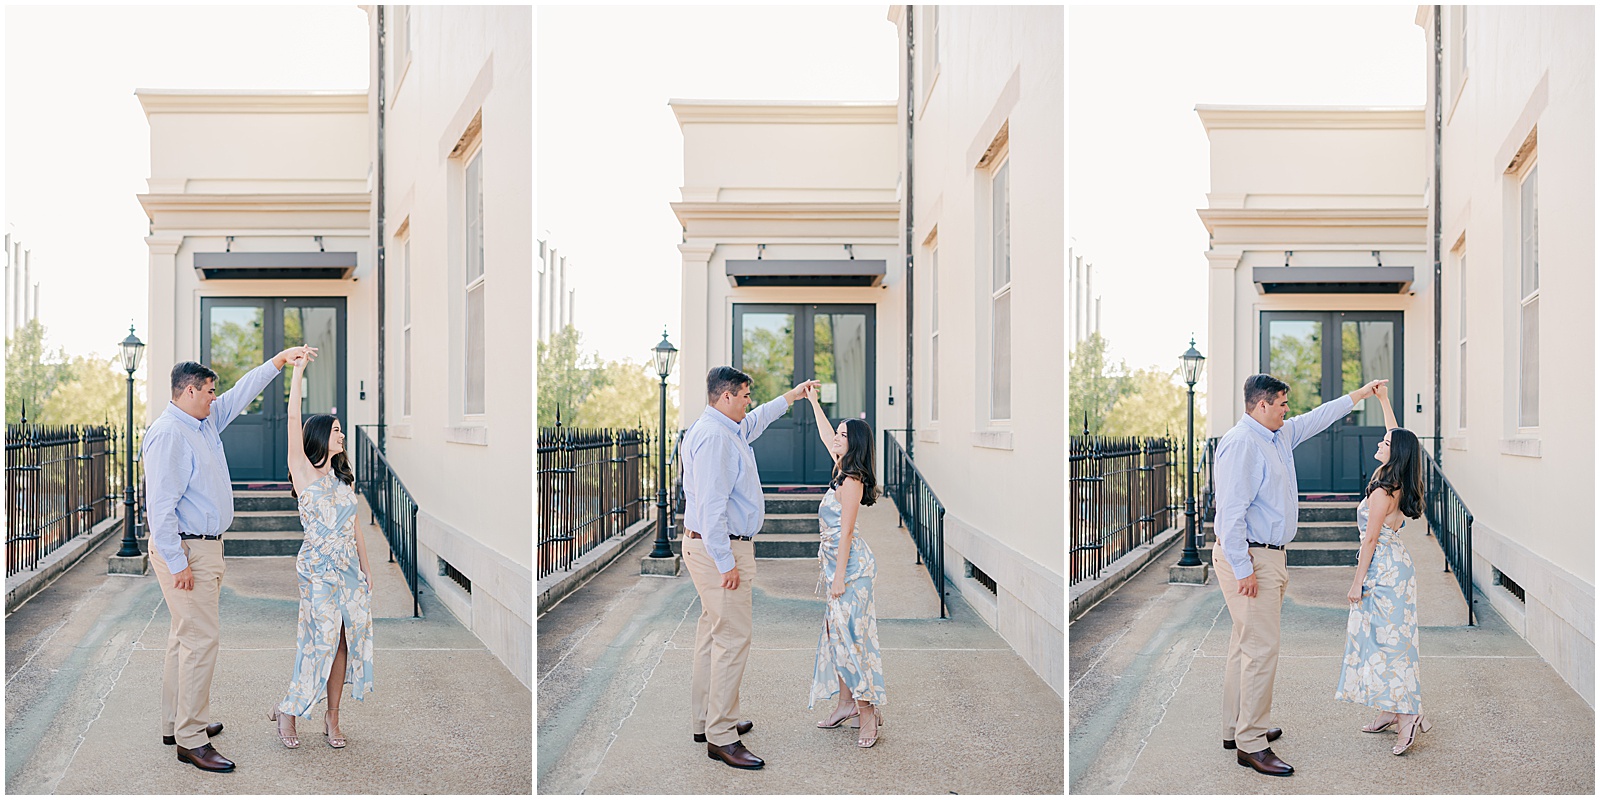 Engagement portraits in historic downtown Huntsville, Alabama